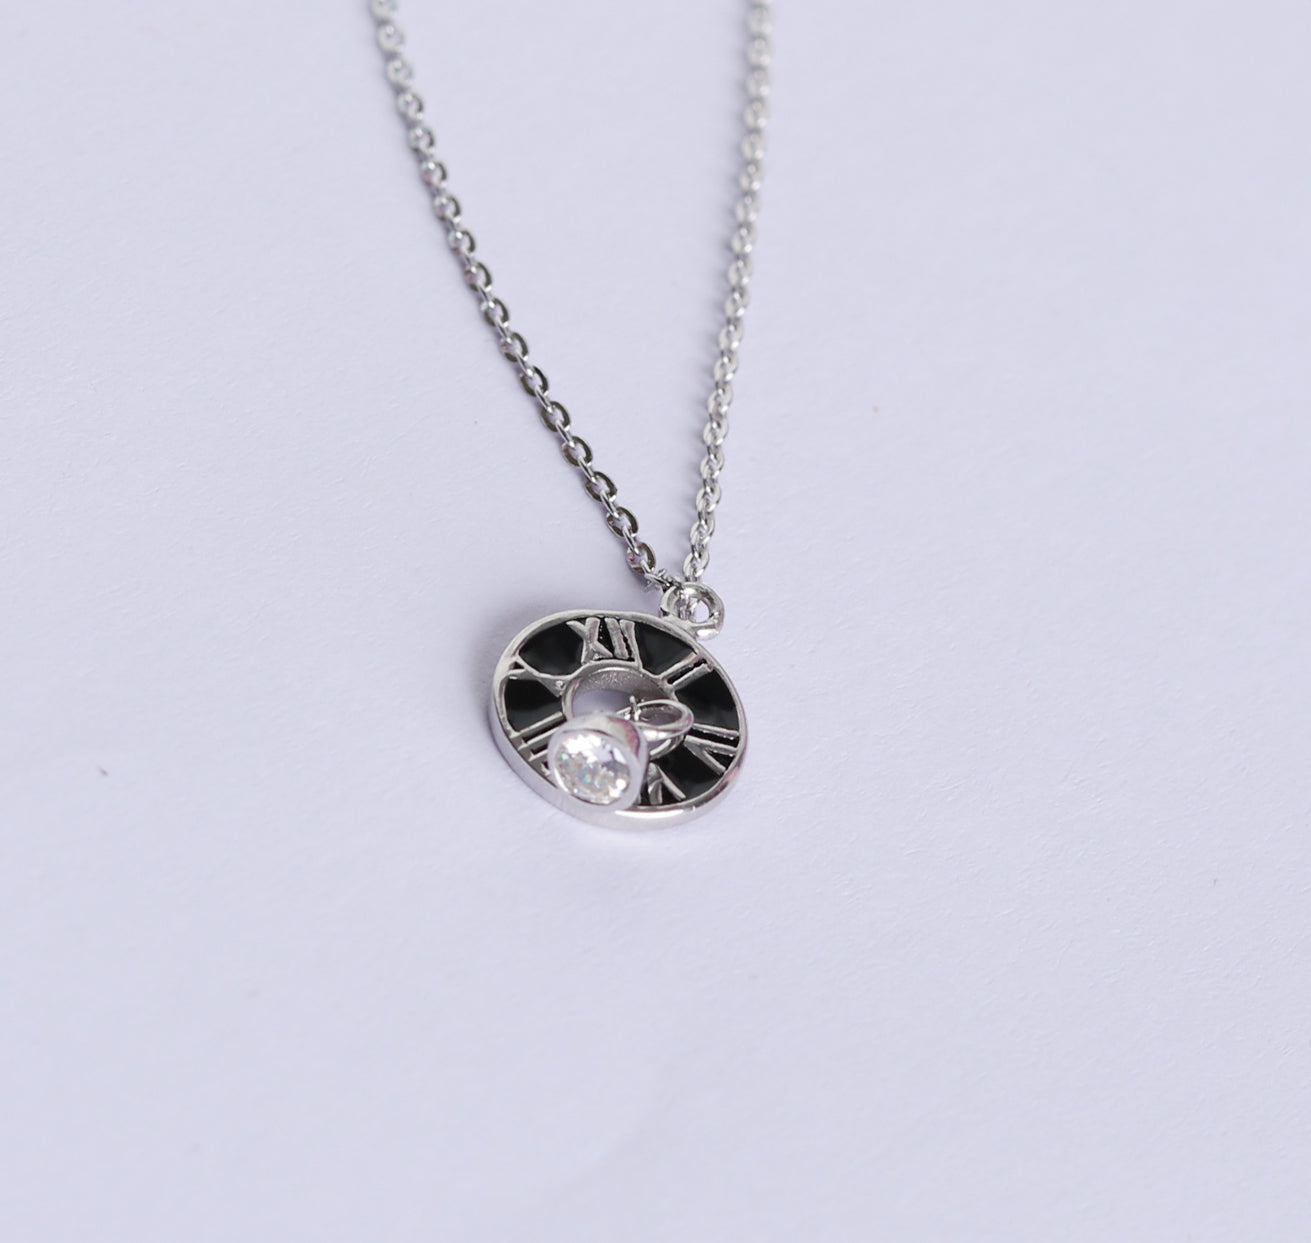 Silver Roman Necklace